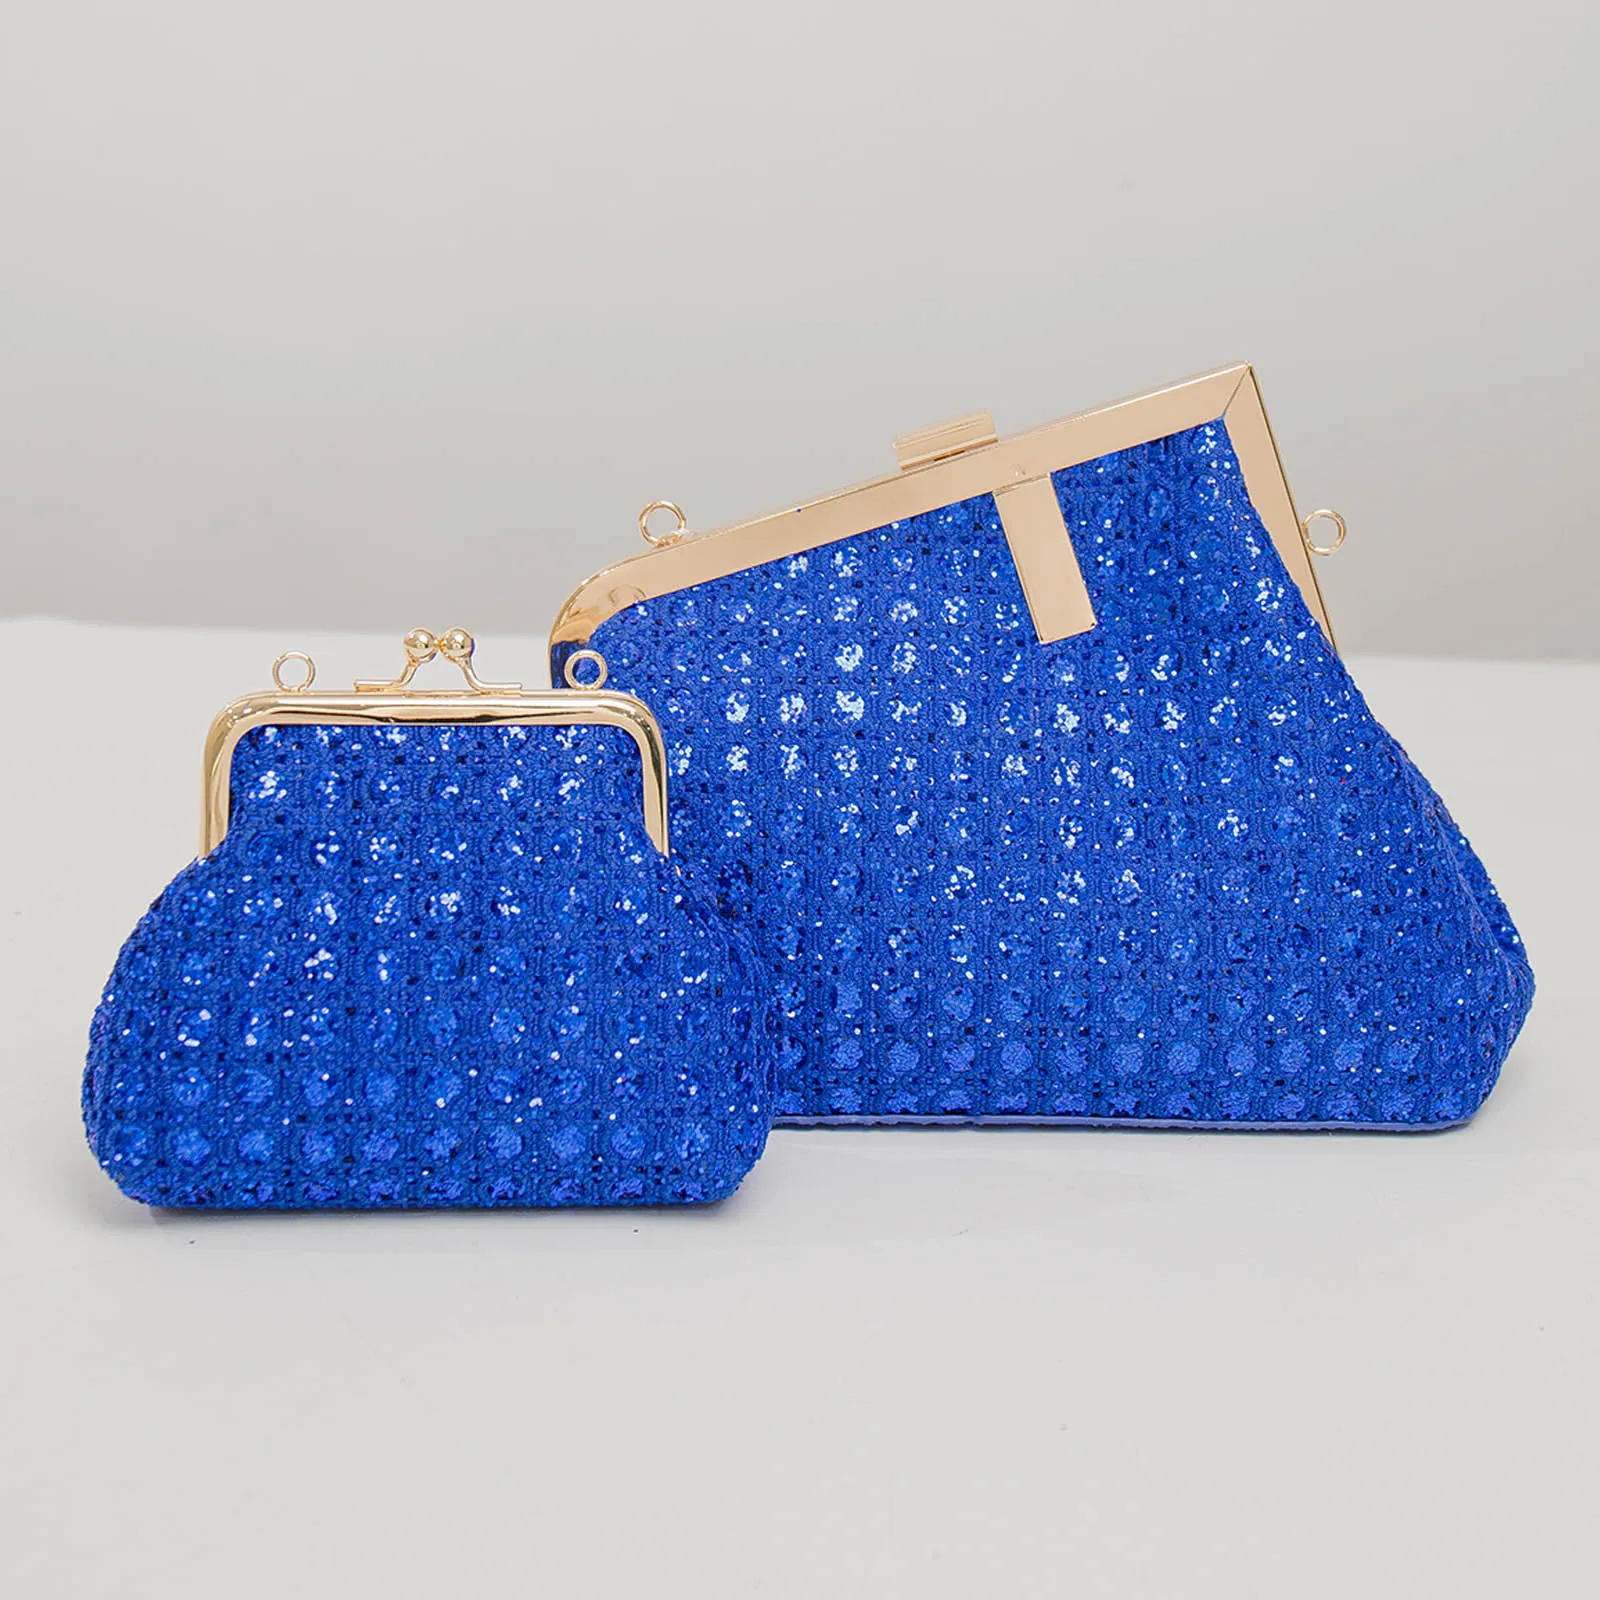 Latest High Quality Creative Design Woven Mini Handbags Chic Style Fashion 2 in 1 Women Bags